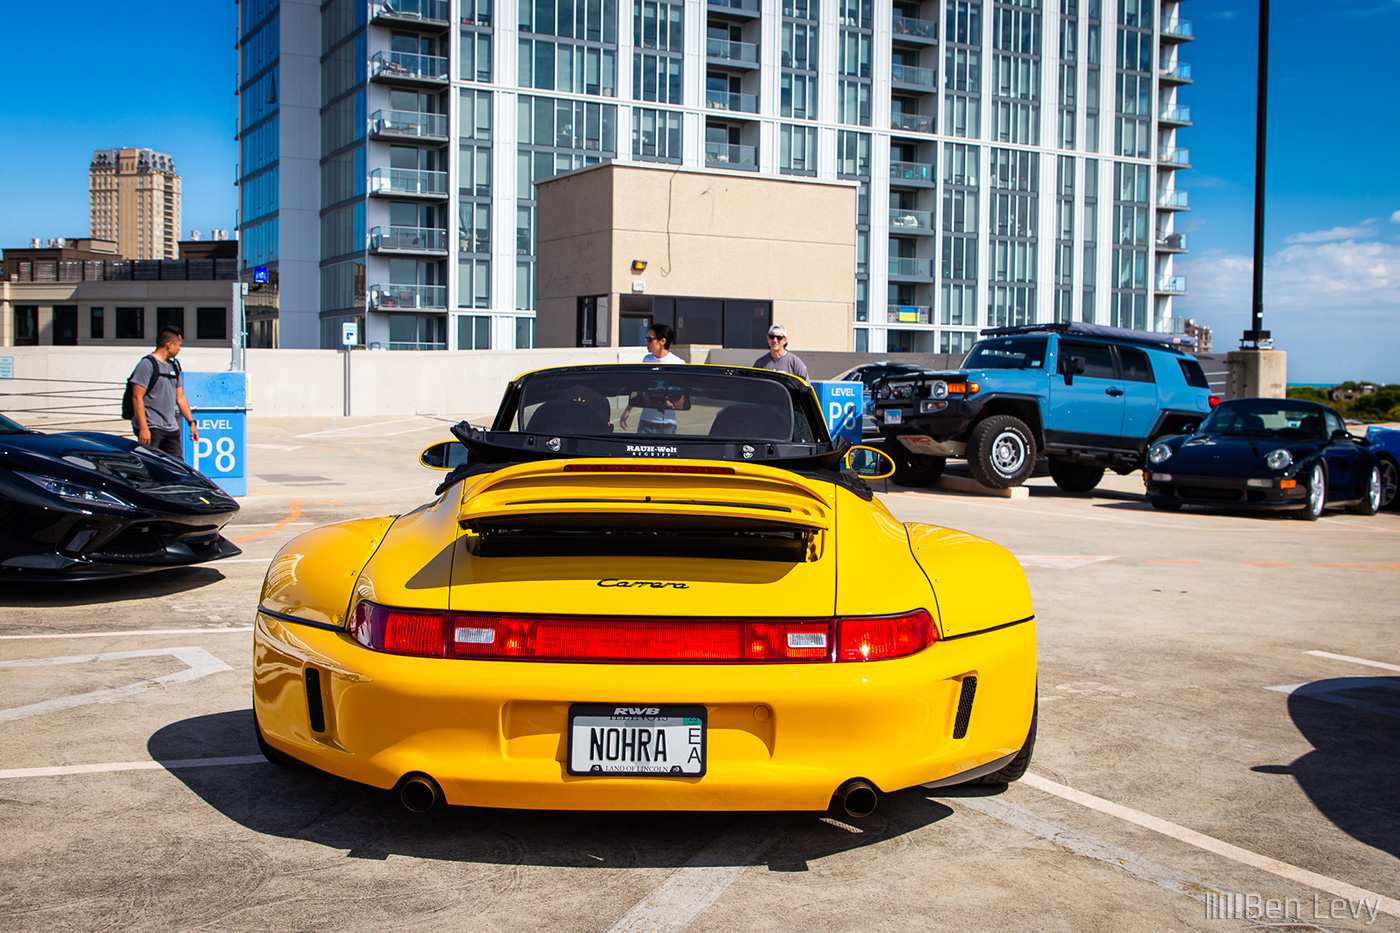 Extra Wide Yellow Porsche 911 Cabriolet